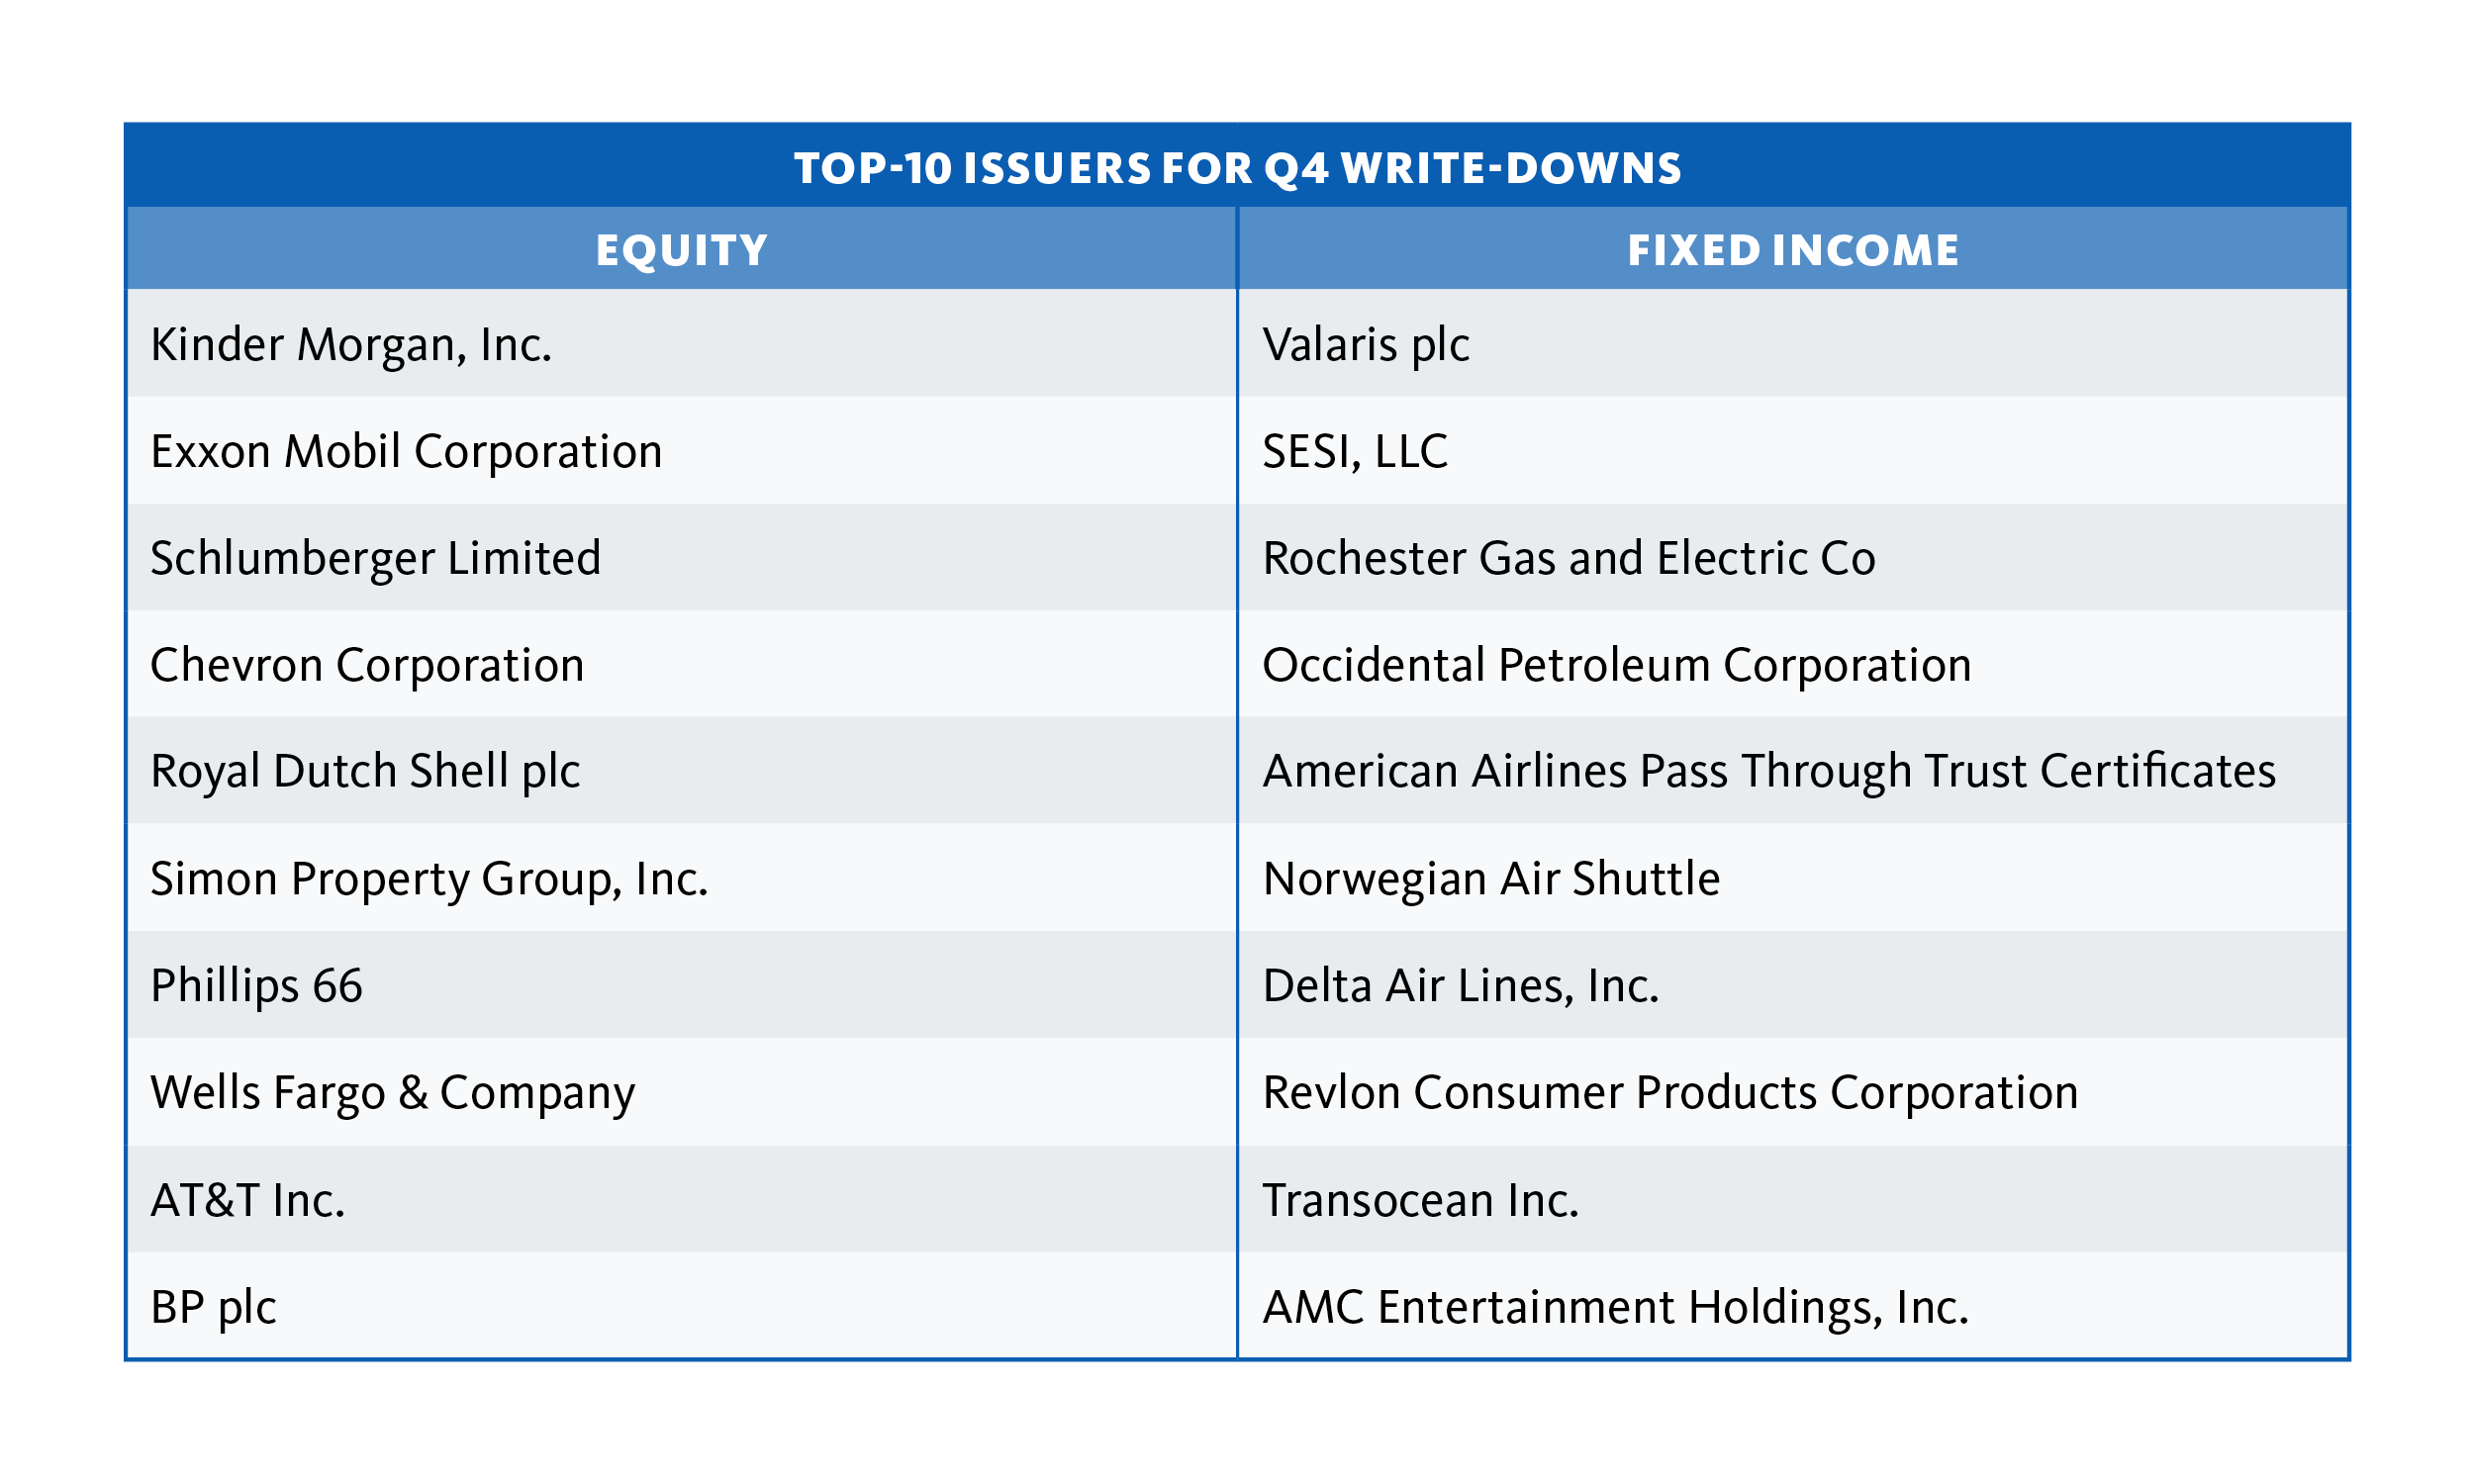 Top 10 Issuers for Q4 Writedowns